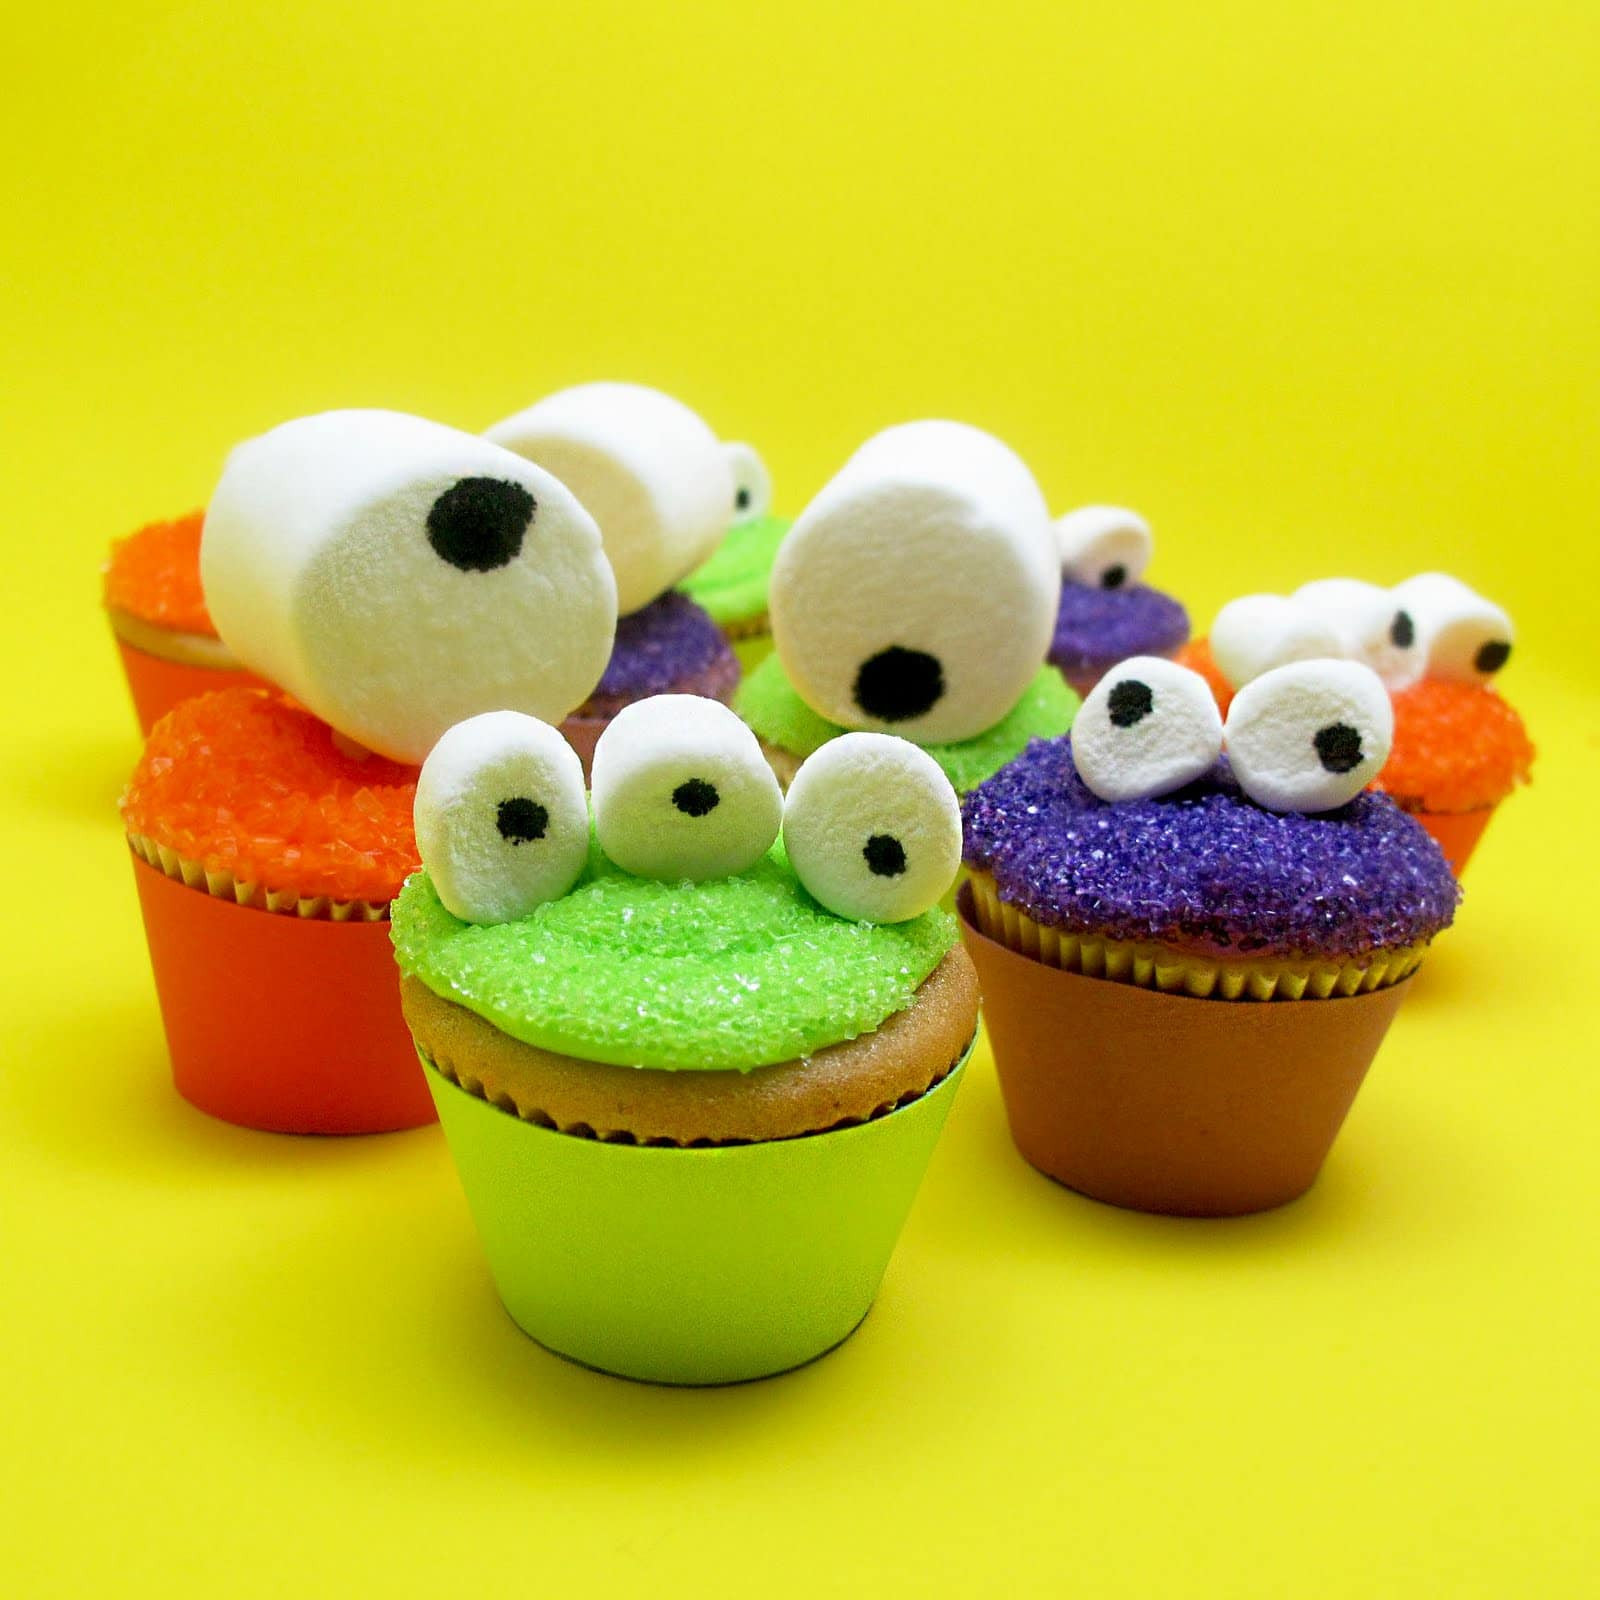 Halloween Monster Cupcakes
 mini monster cupcakes for an easy Halloween treat idea